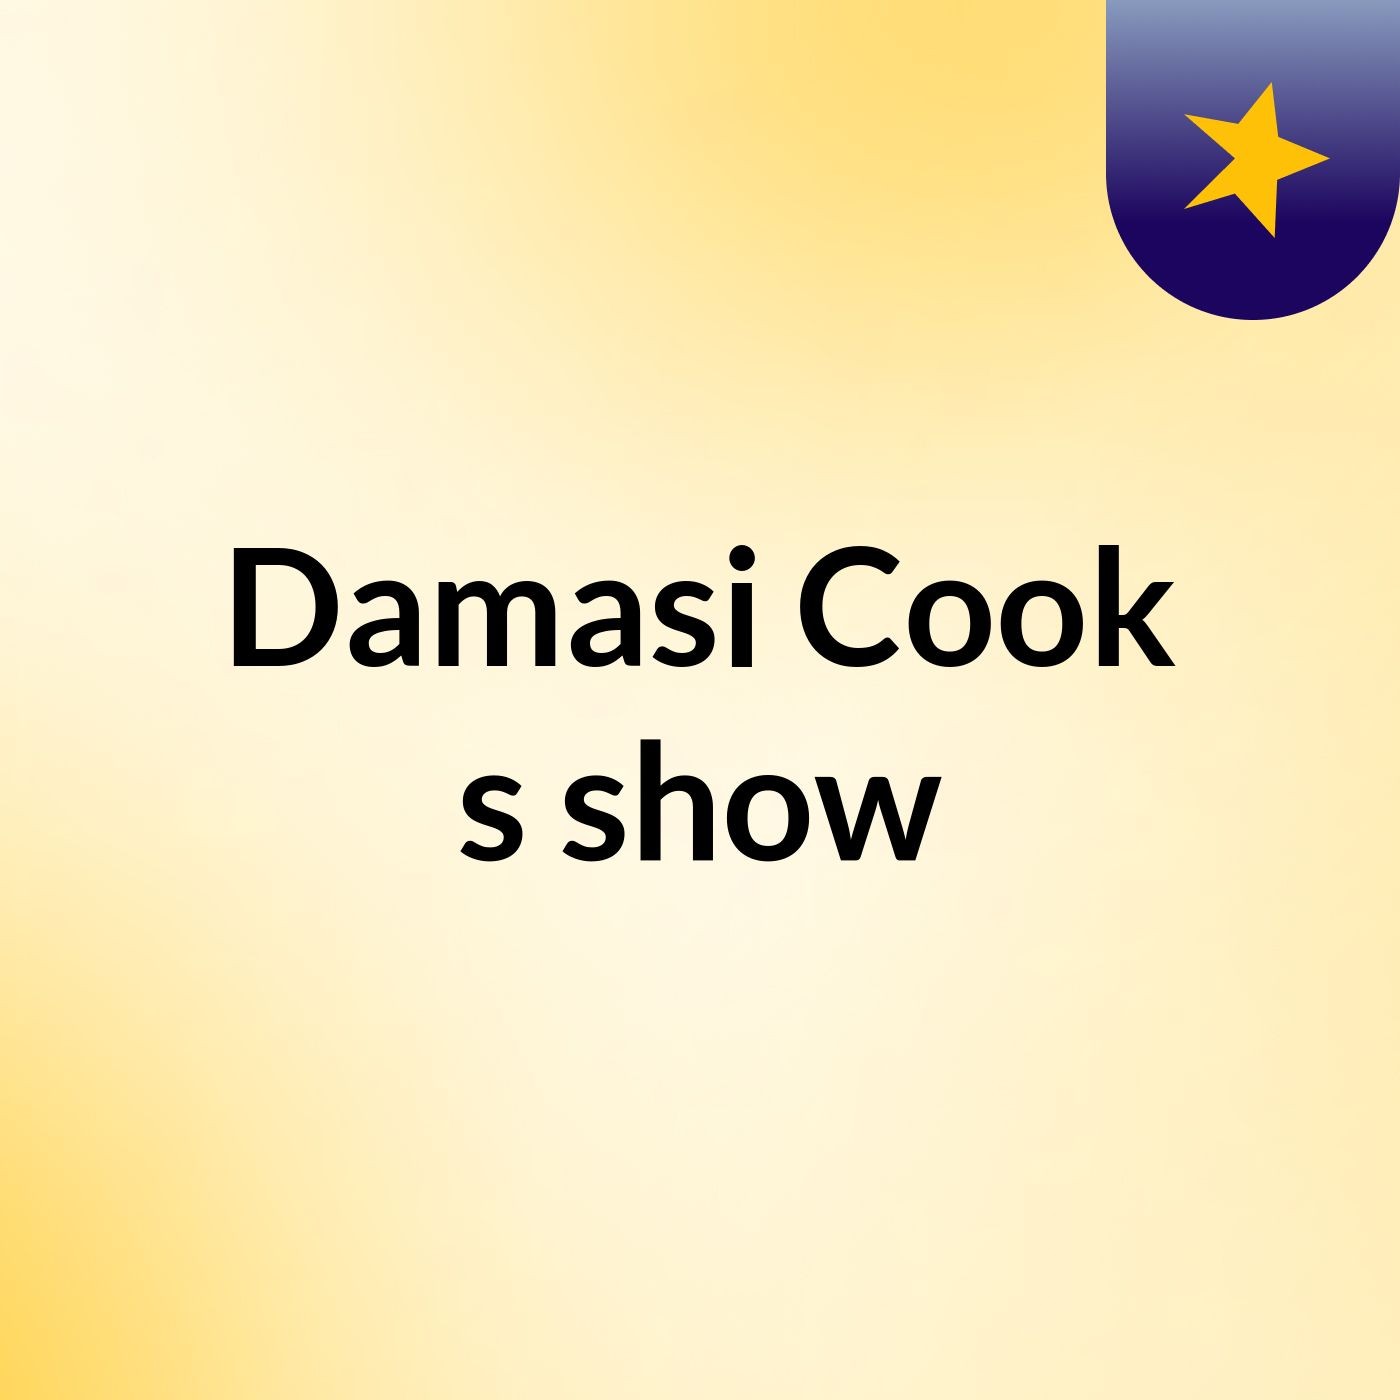 Episode 3 - Damasi Cook's show